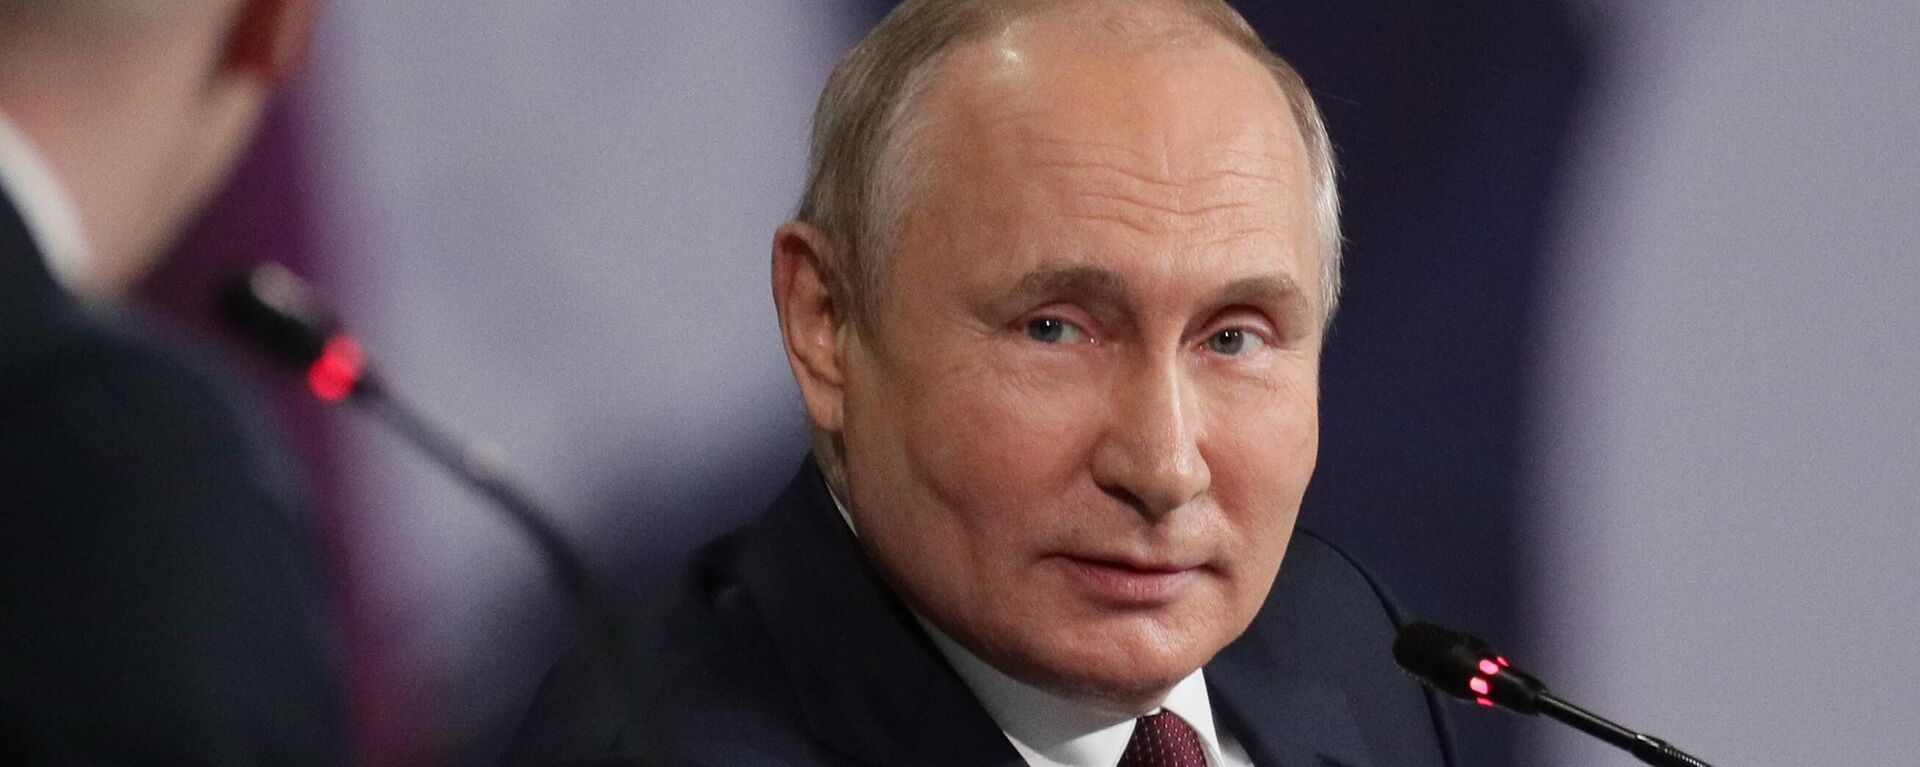 Rusijos prezidentas Vladimiras Putinas - Sputnik Lietuva, 1920, 12.06.2021